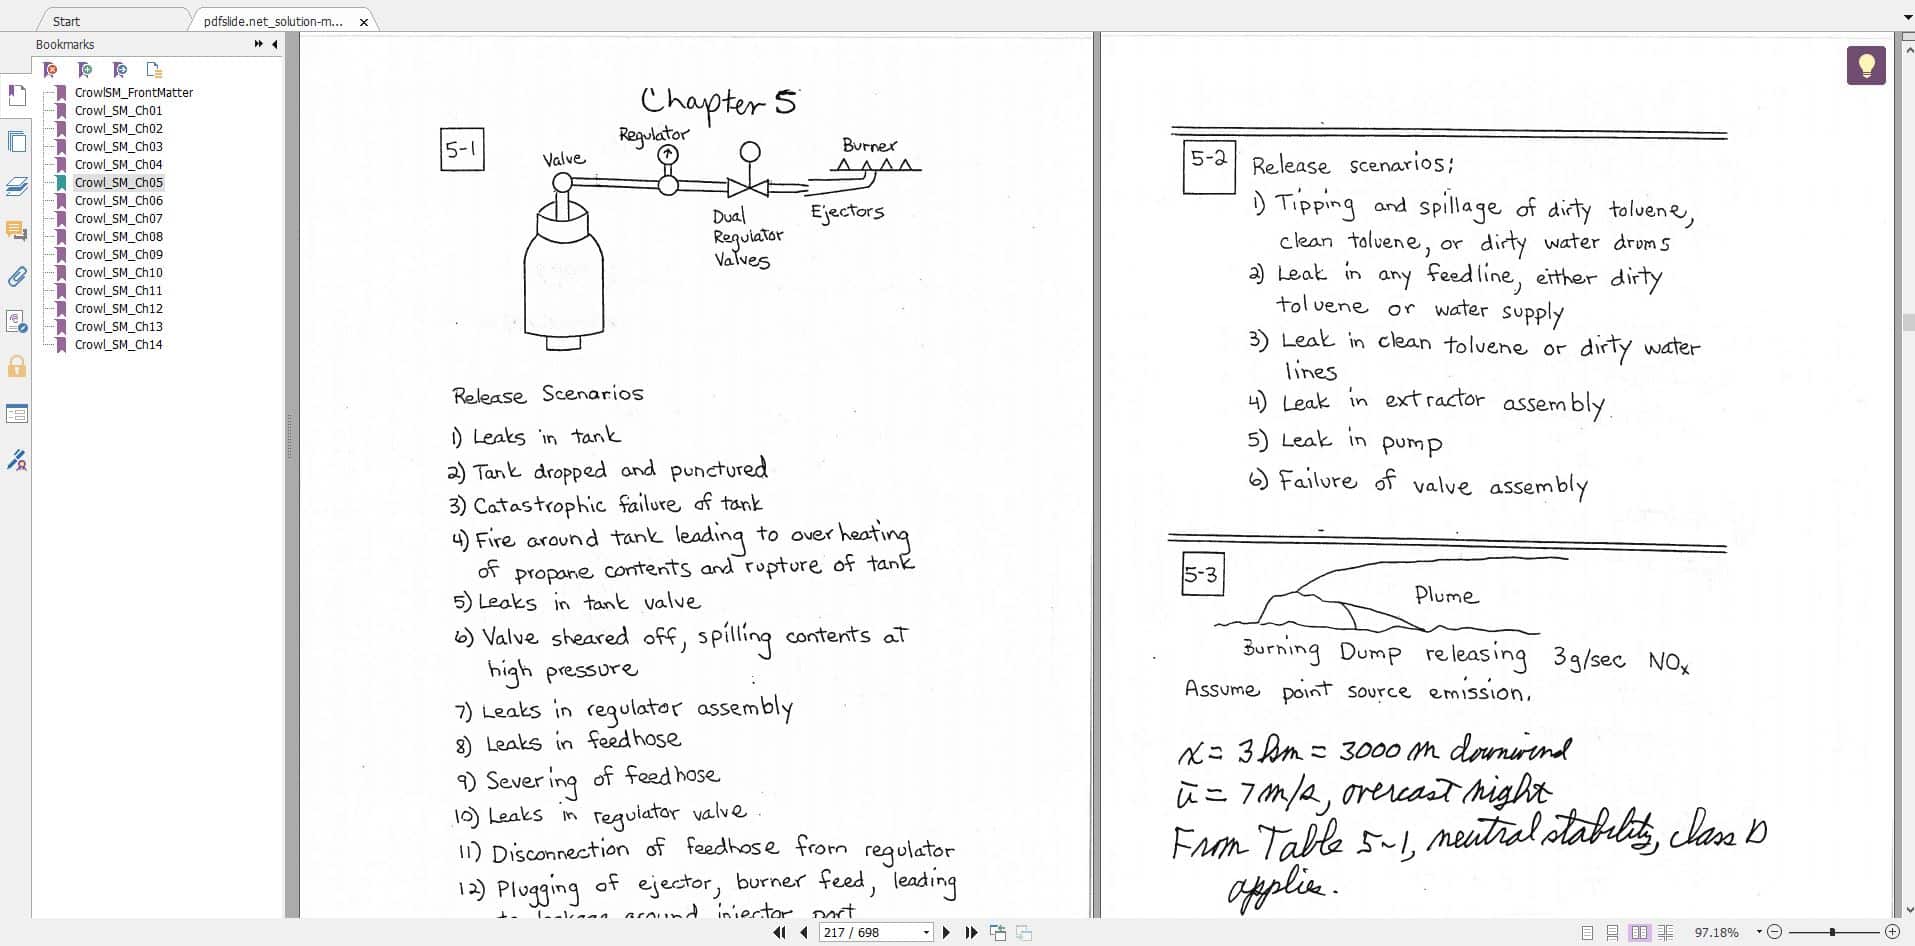 دانلود حل المسائل ایمنی فرایند شیمیایی خرید ایبوک Solutions Manual for Chemical Process Safety نسخه سوم